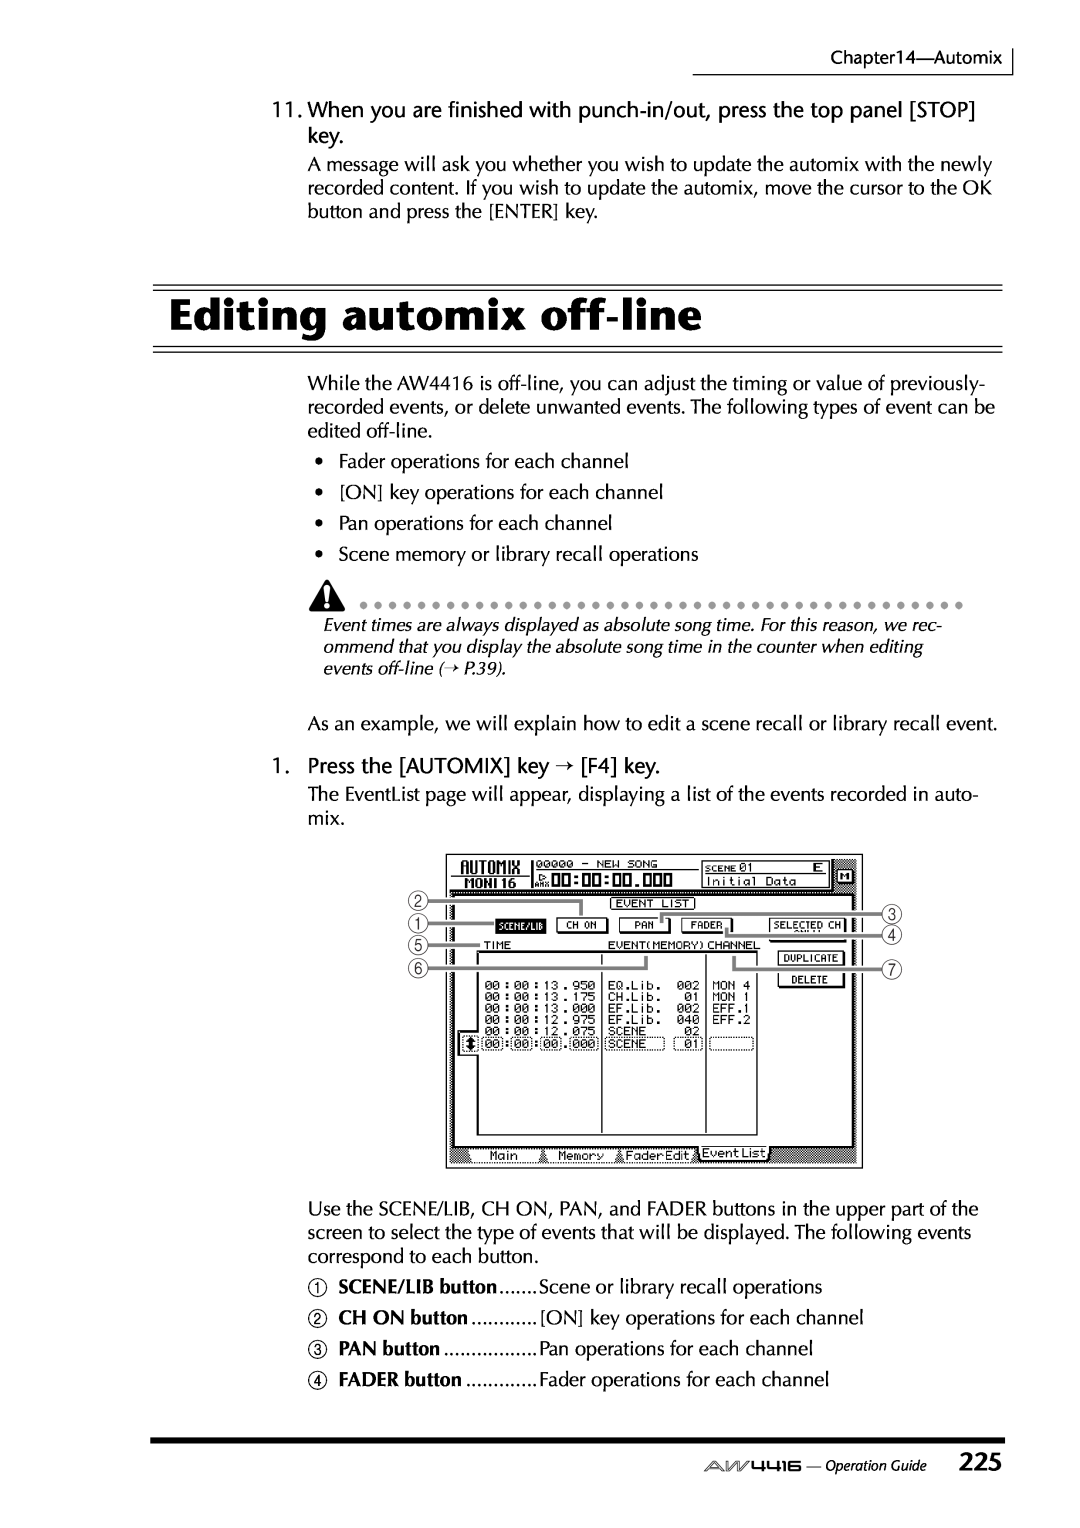 Yamaha AW4416 manual Editing automix off-line, Press the AUTOMIX key → F4 key, 2 1 5 6, 3 4 7 